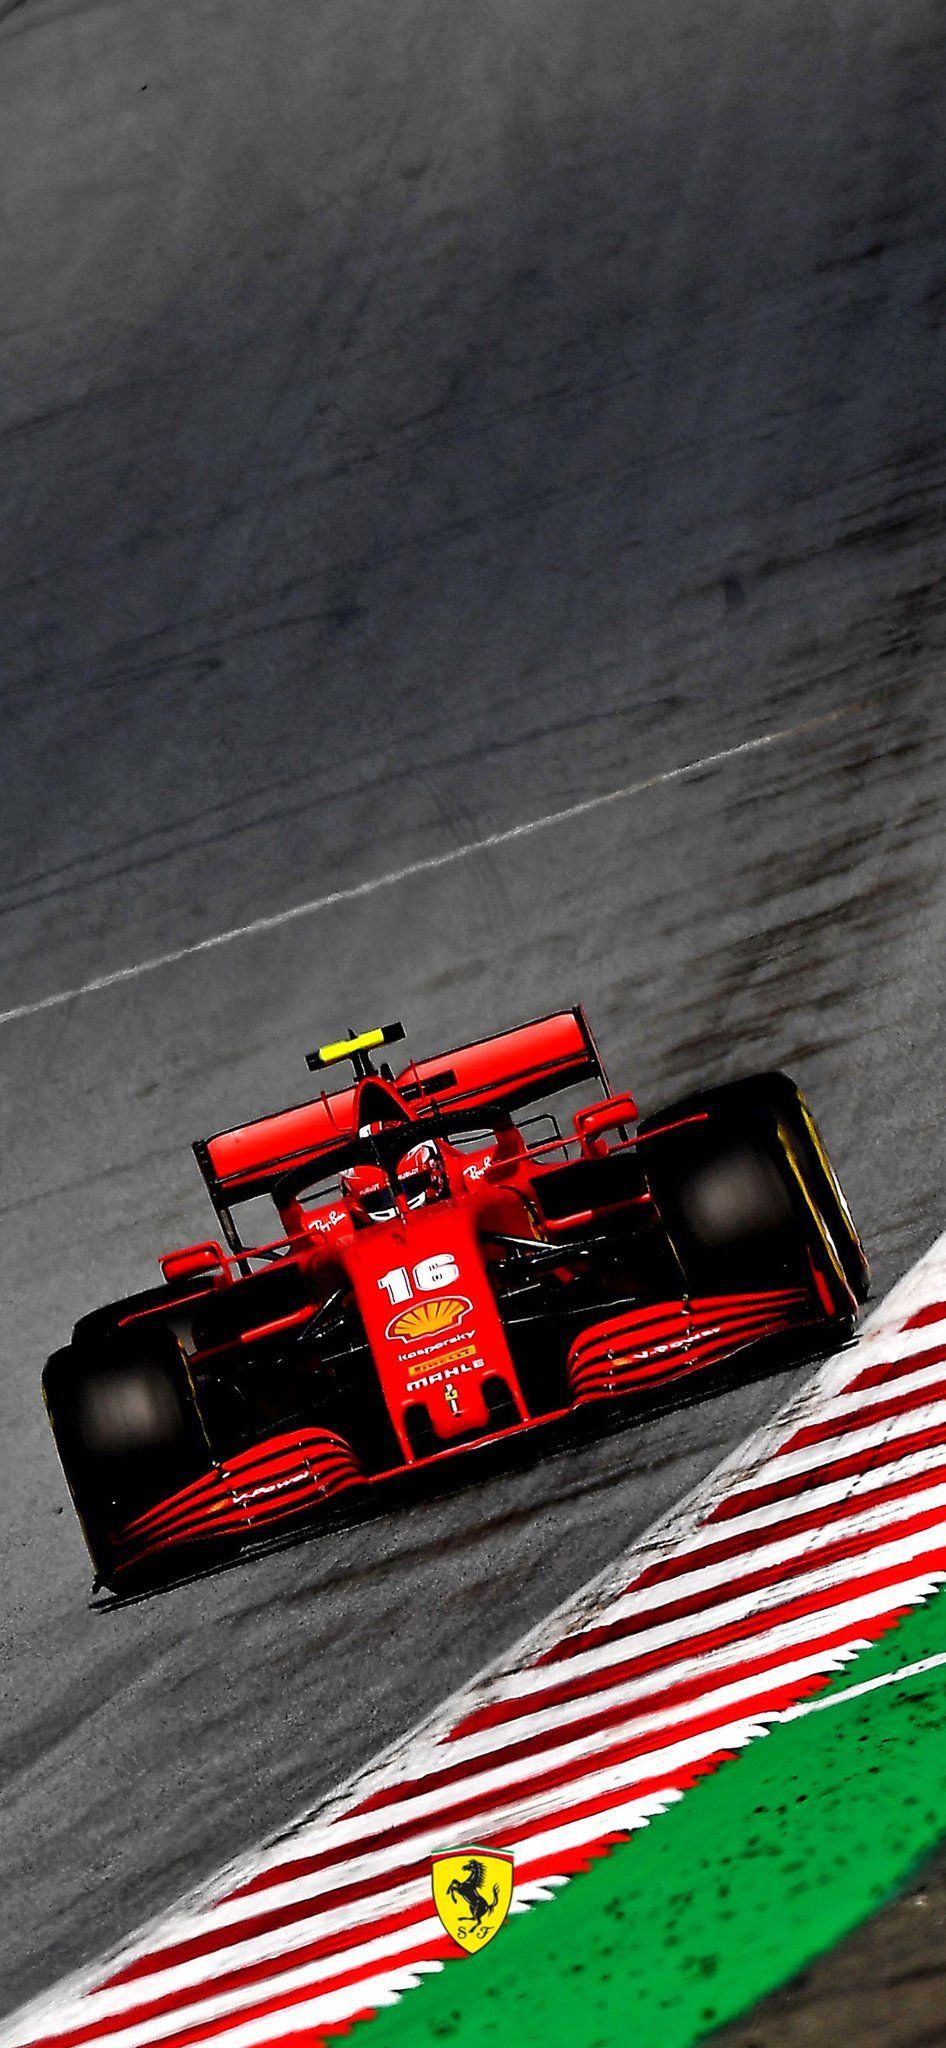 Scuderia Ferrari on Twitter. iPhone wallpaper, Formula 1 iphone wallpaper, Ferrari